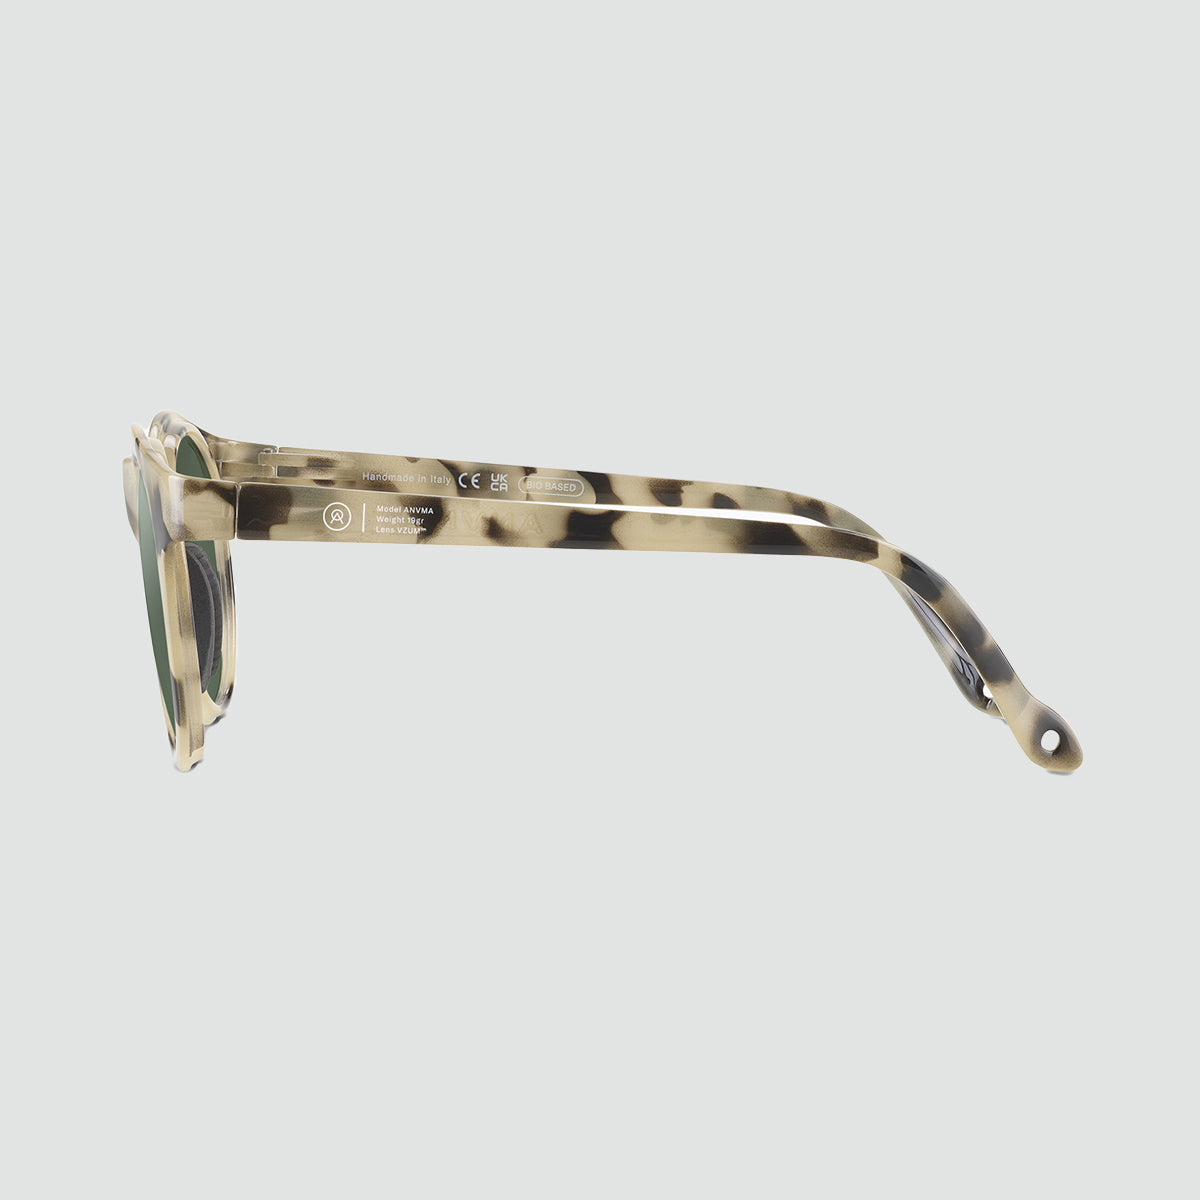 Anvma LEI Sunglasses - Sequoia White Glossy VZUM™ LEAF